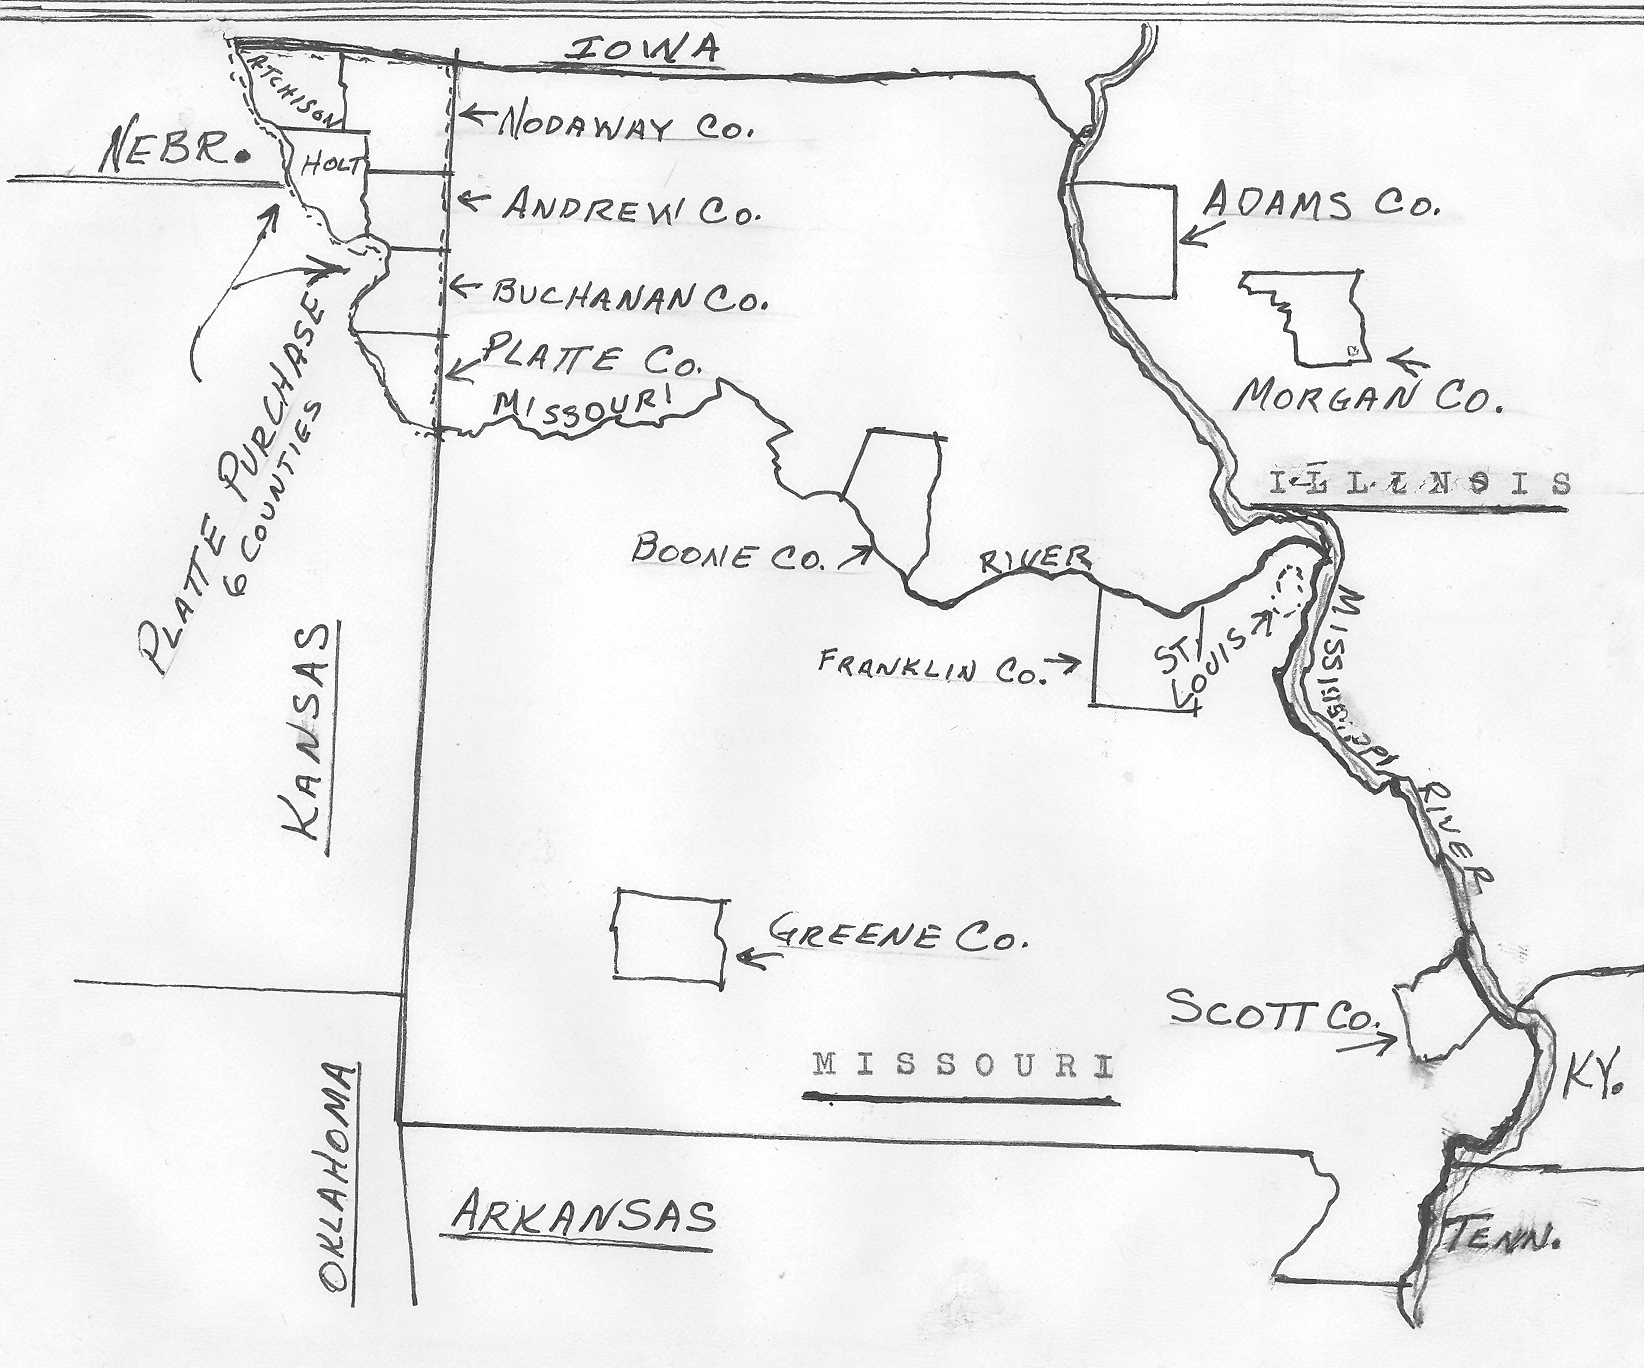 a hand drawn map of Missouri